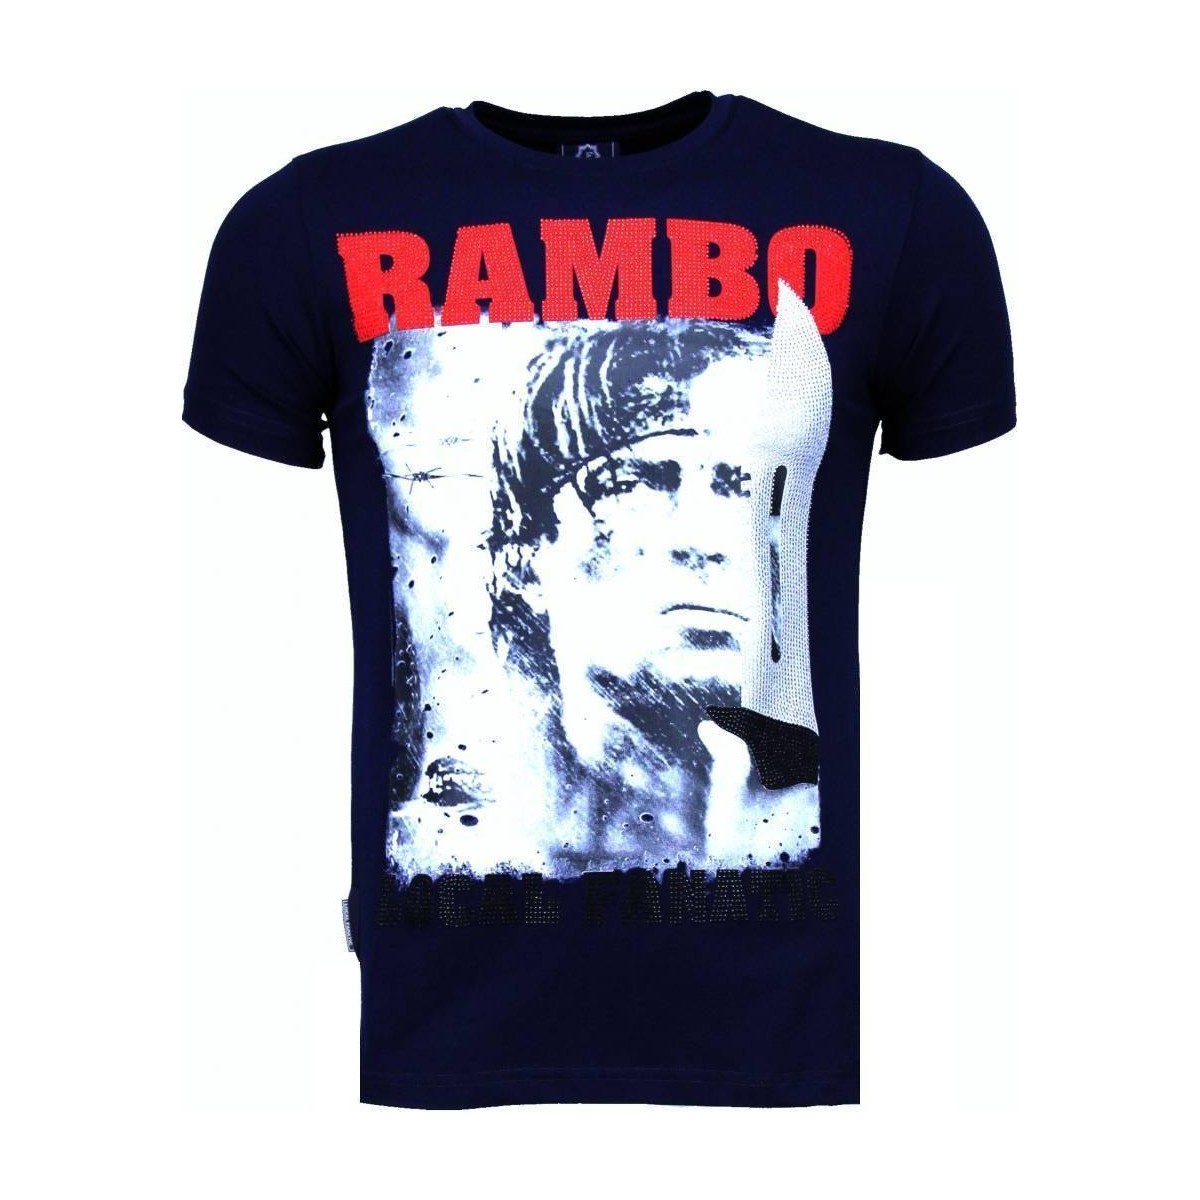 Textiel Heren T-shirts korte mouwen Local Fanatic Rambo Rhinestone Blauw